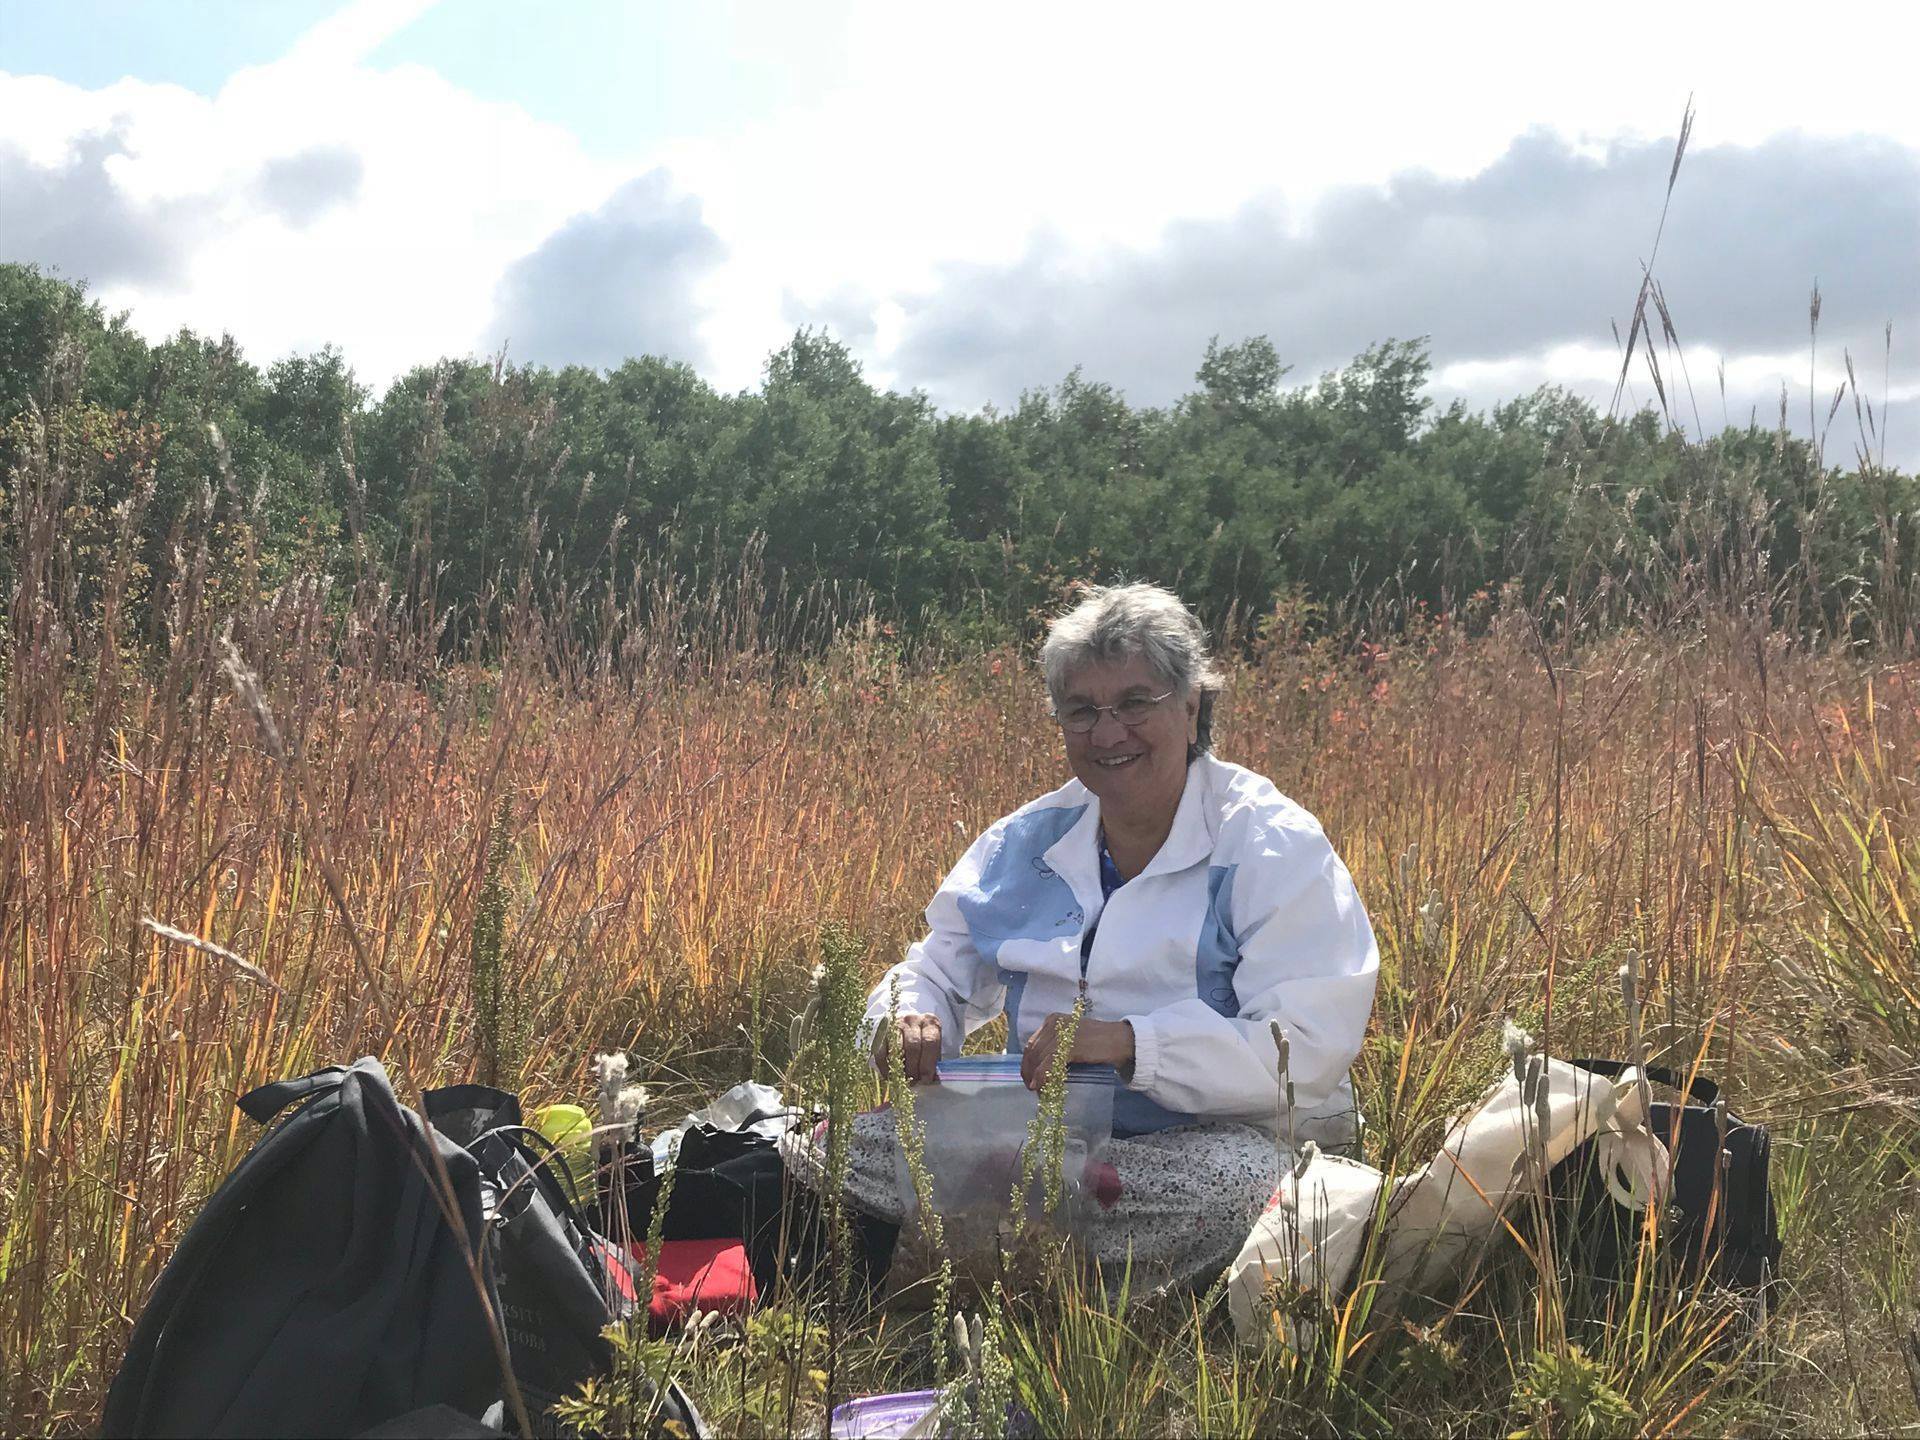 Woman sitting harvesting medicine in field 